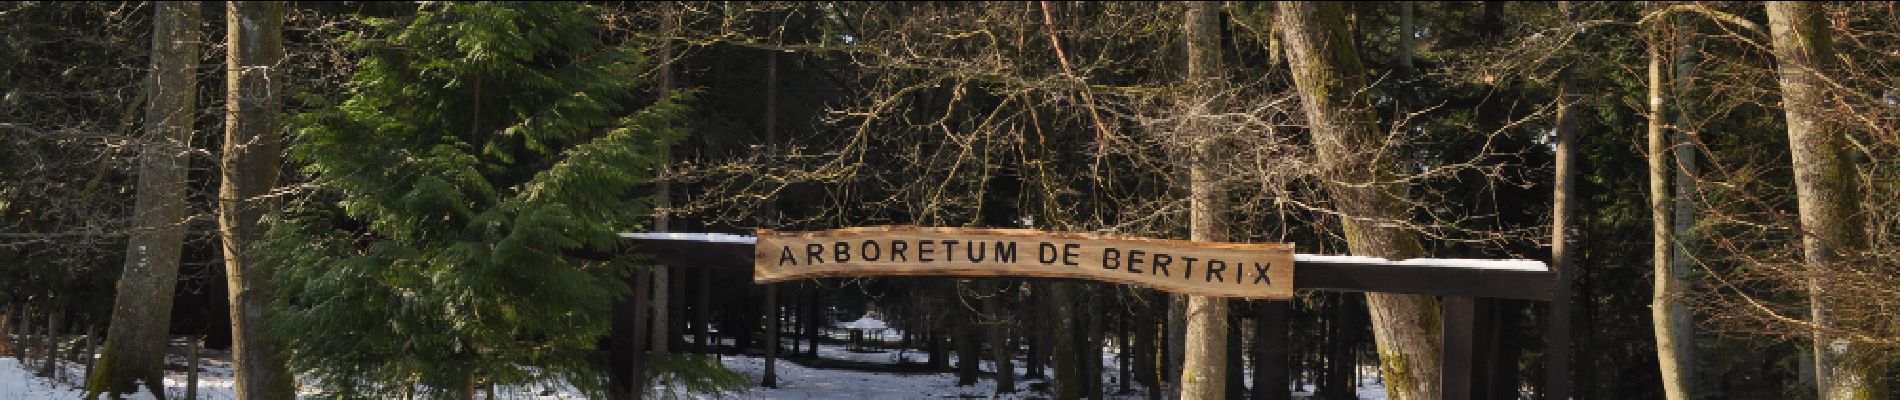 POI Bertrix - Arboretum de Bertrix - Photo